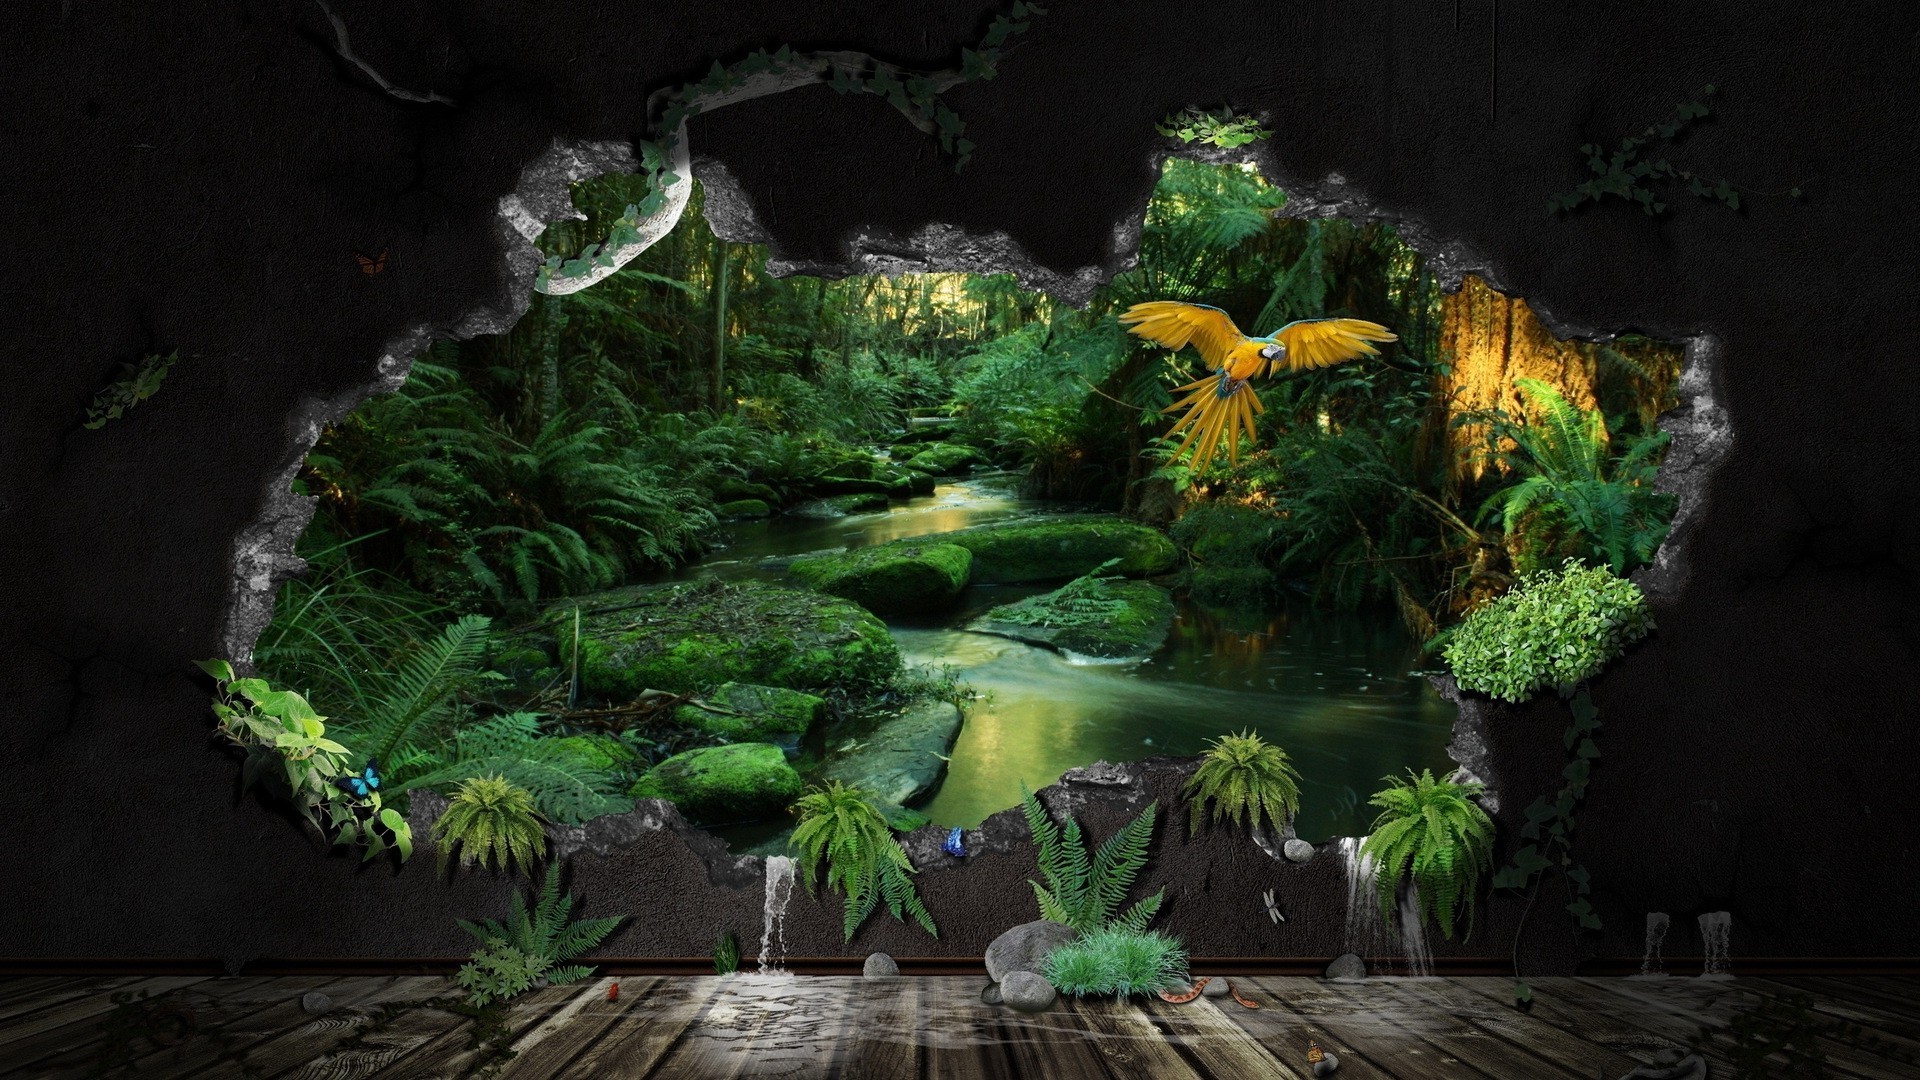 digital Art, CGI, Nature, Jungles, Stream, Rock, Plants, Birds, Parrot, Trees, Water, Walls, Wooden Surface Wallpaper